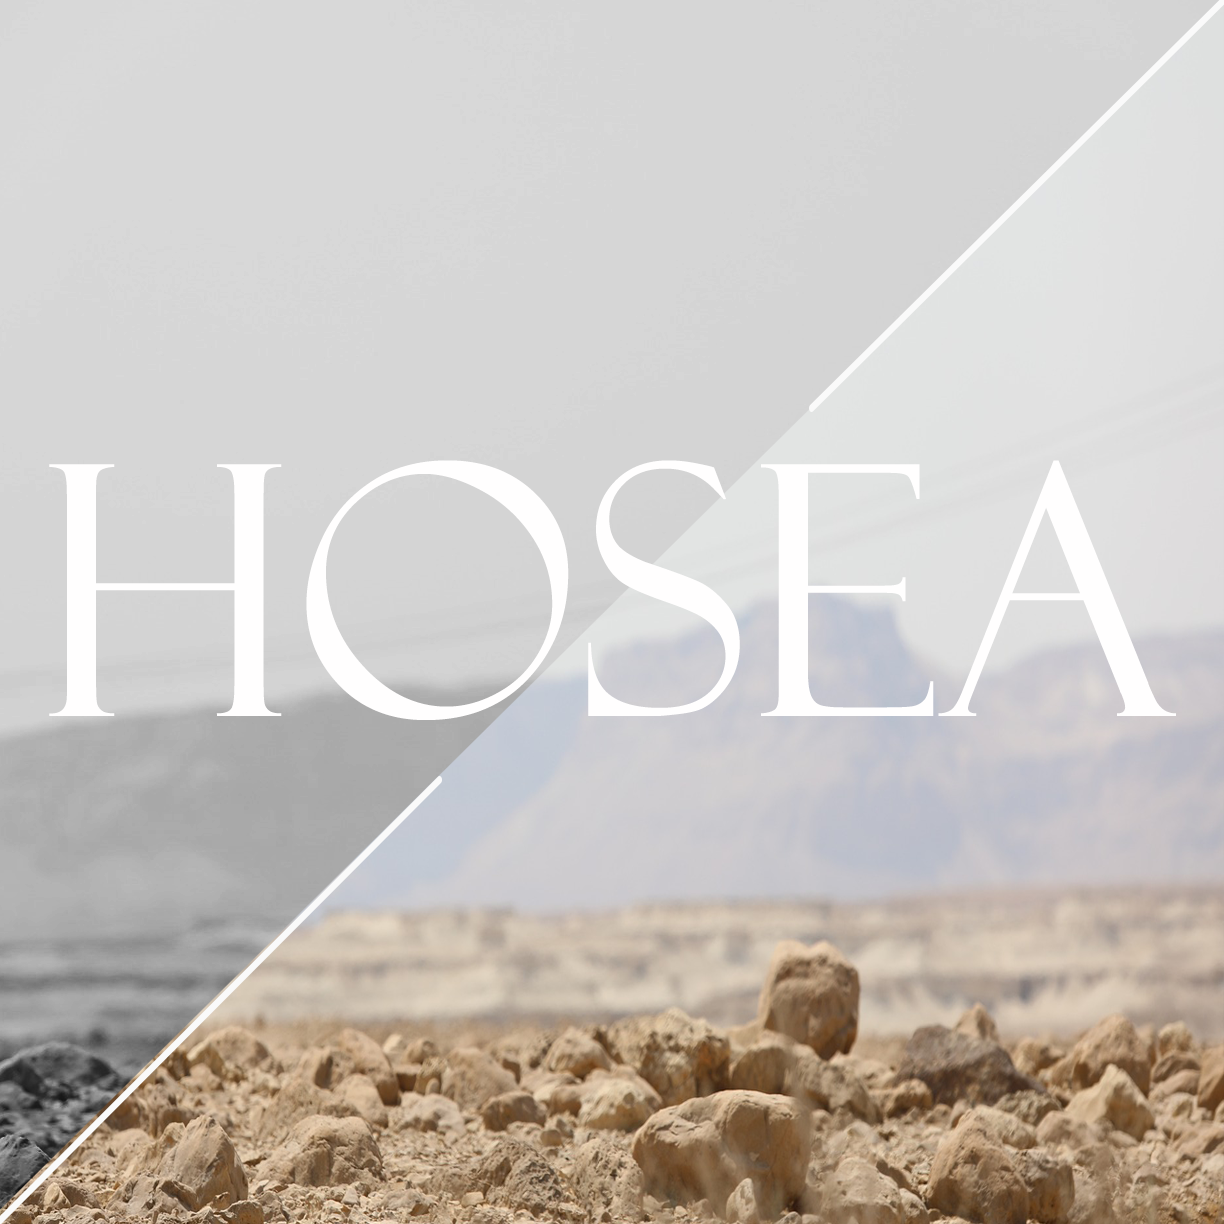 The Book of Hosea Series